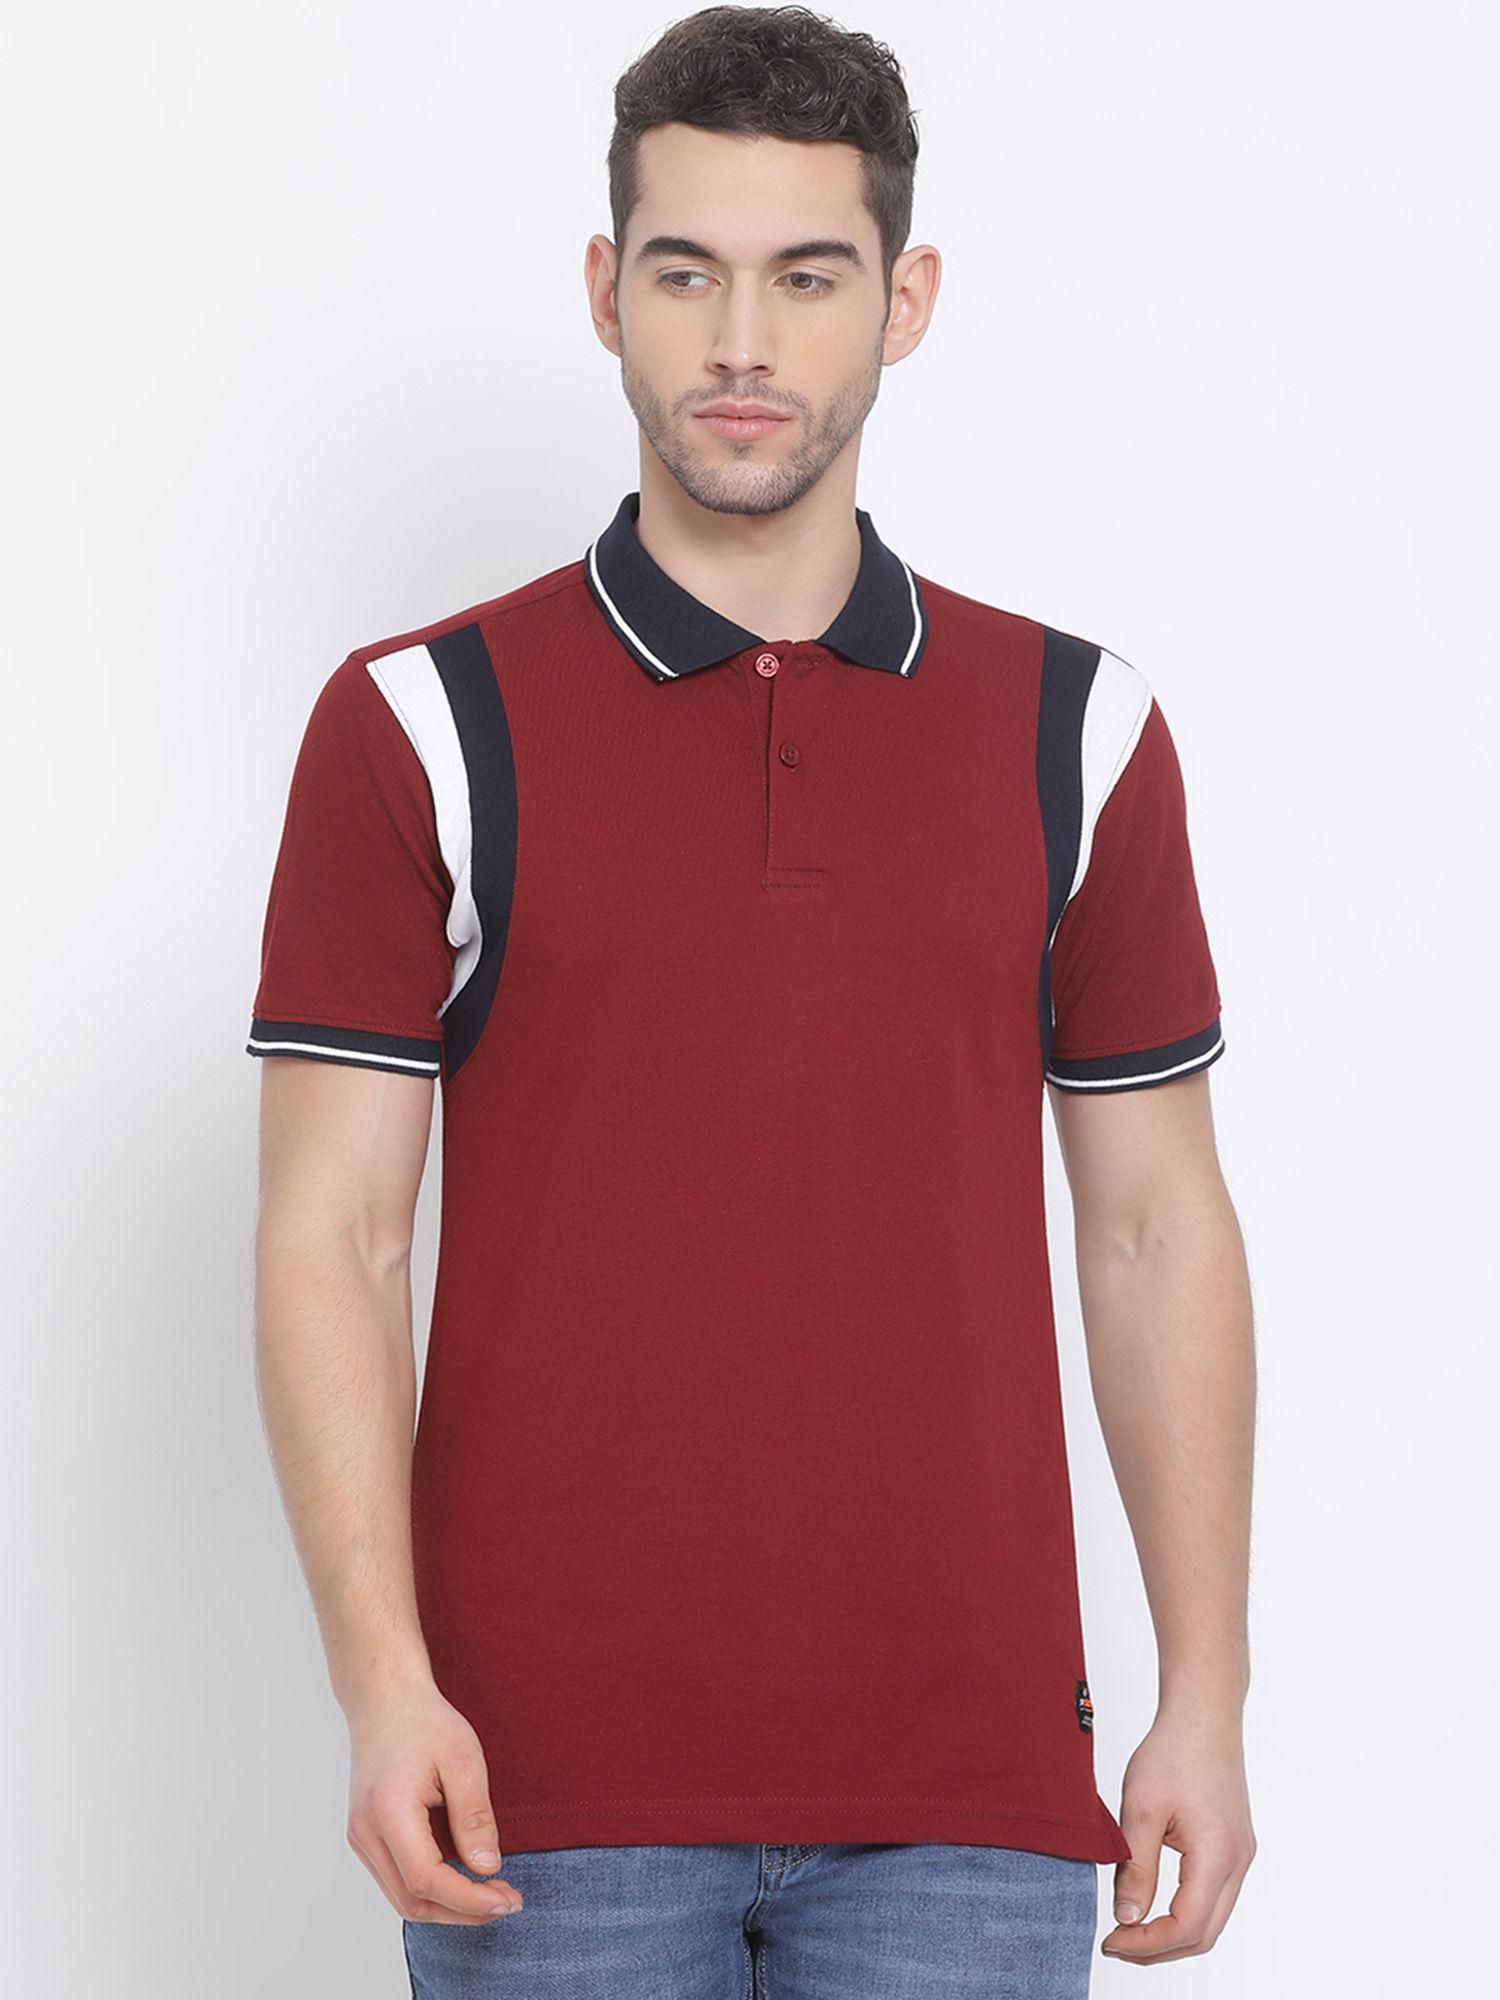 men's maroon half sleeve colorblocked polo neck t-shirt